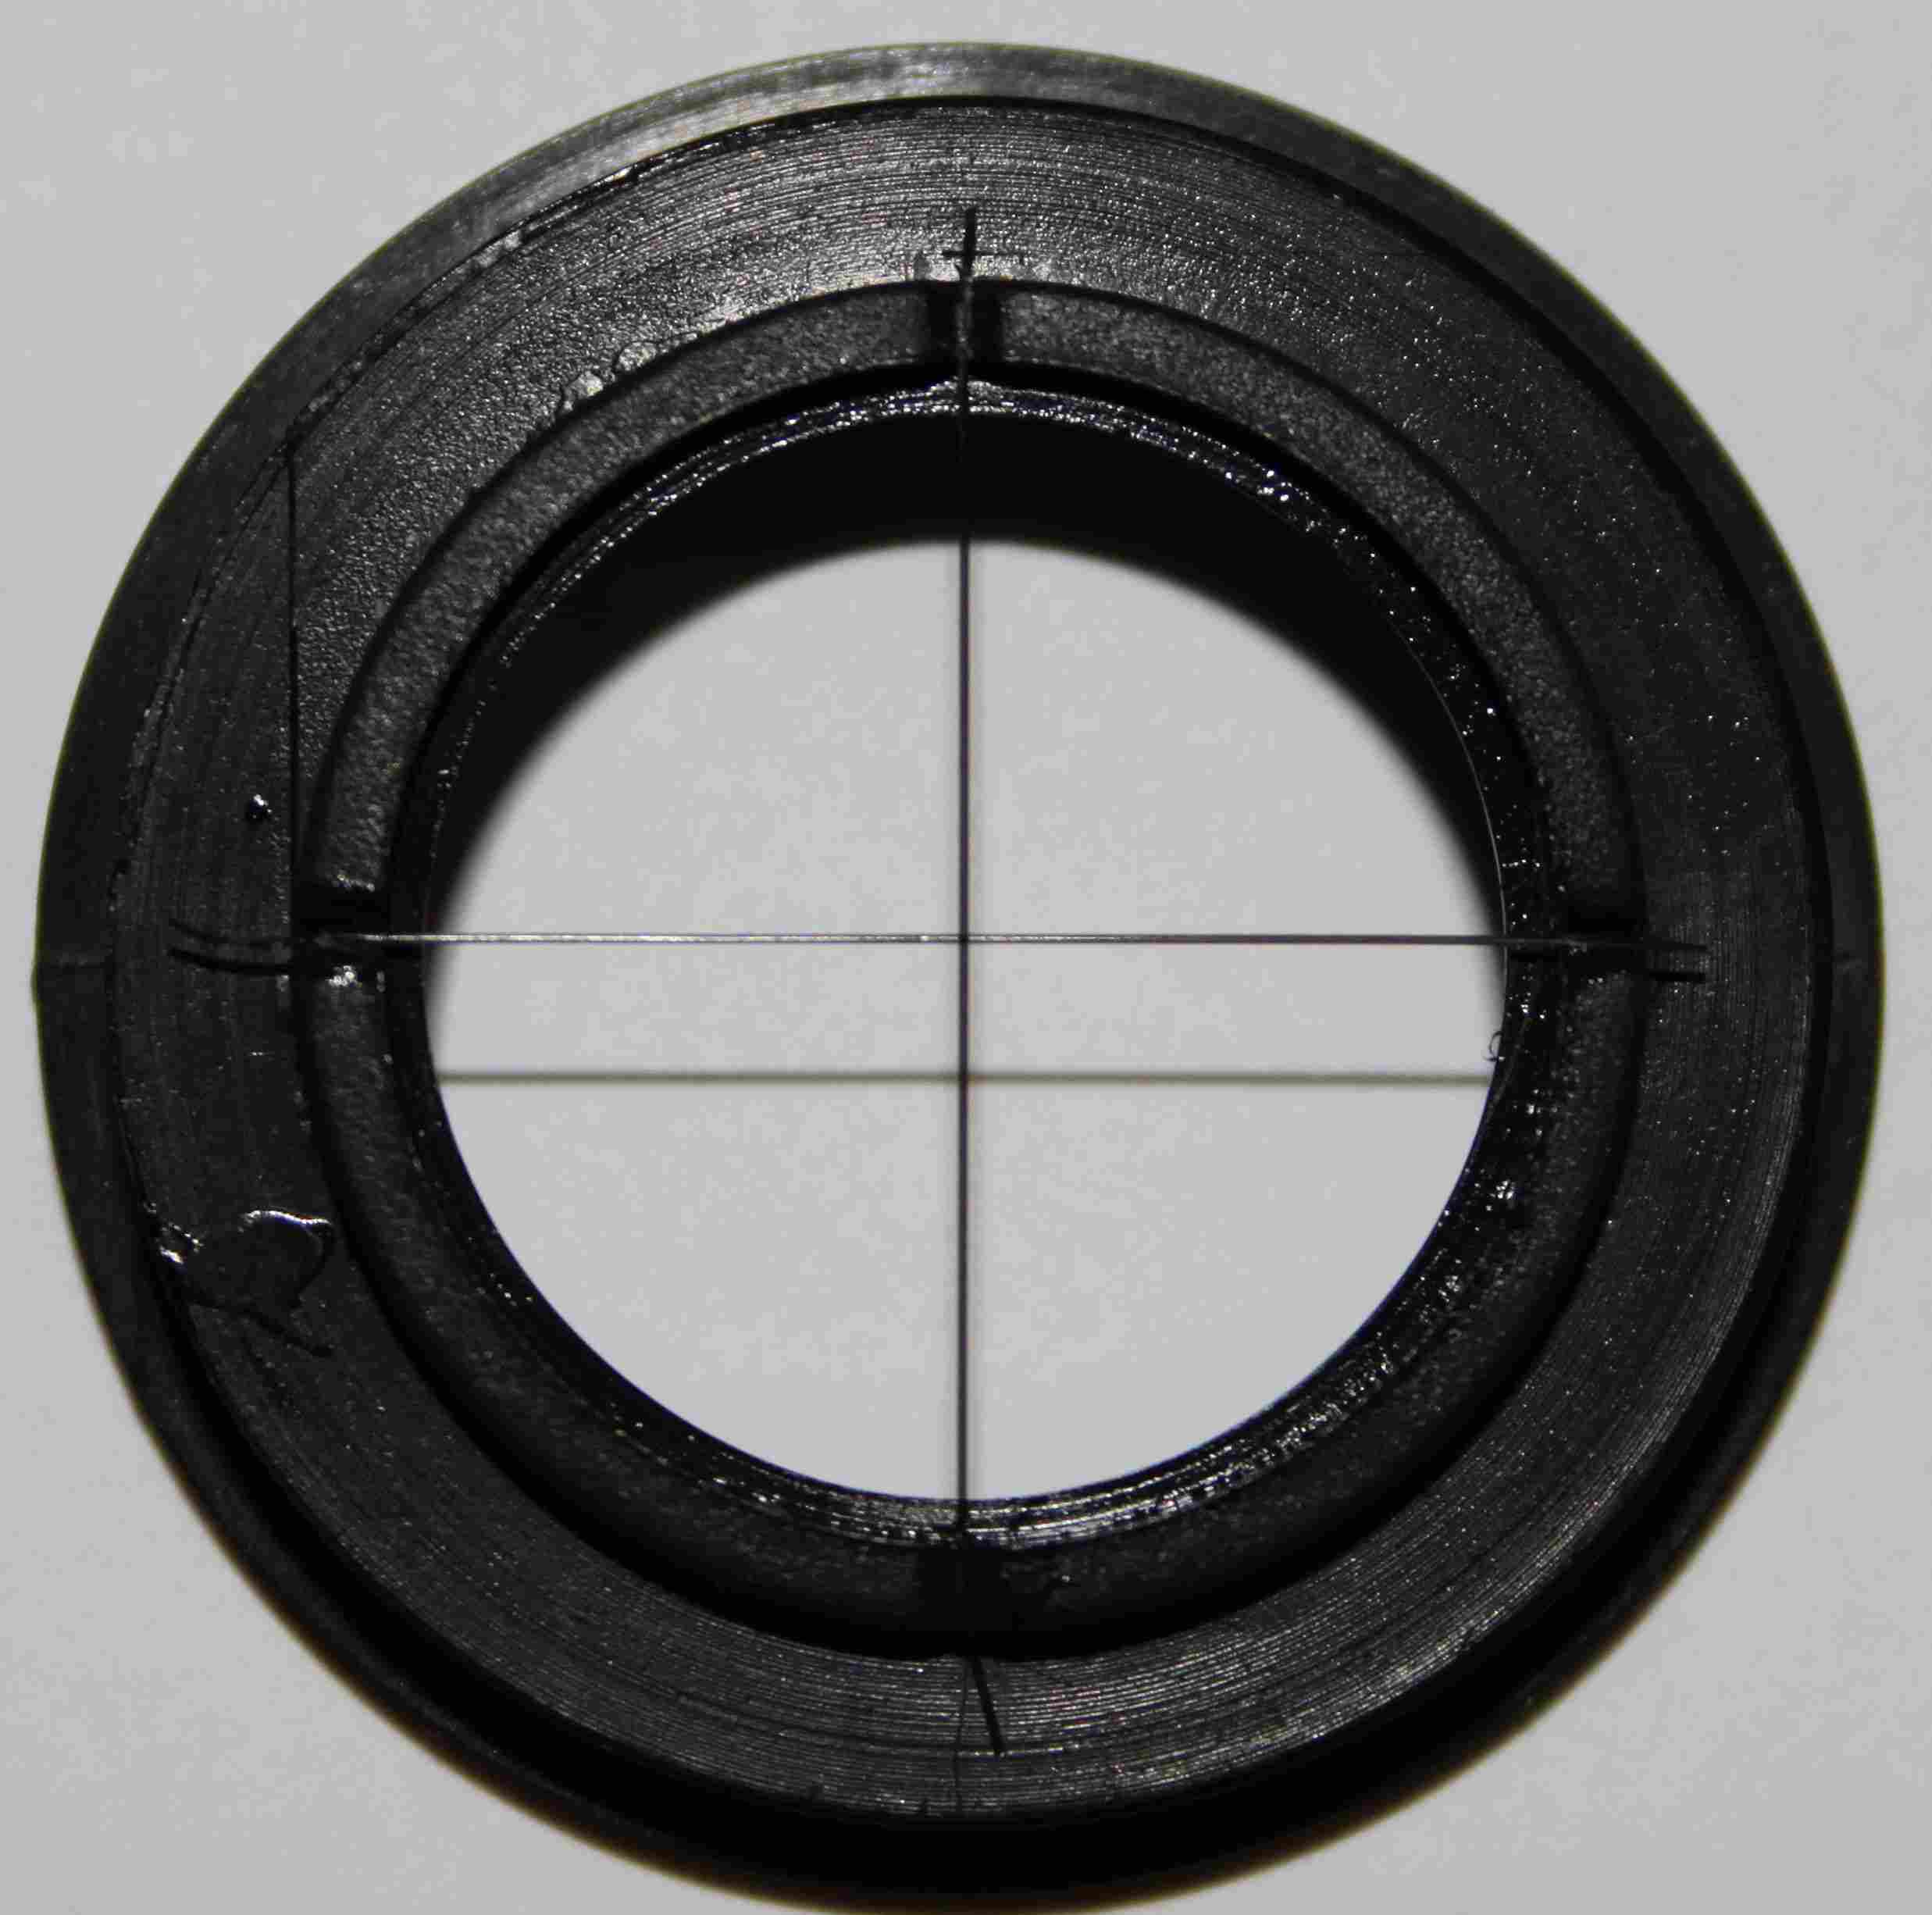 Replacing cross hairs in Meade 8x50 spotting scope - Meade